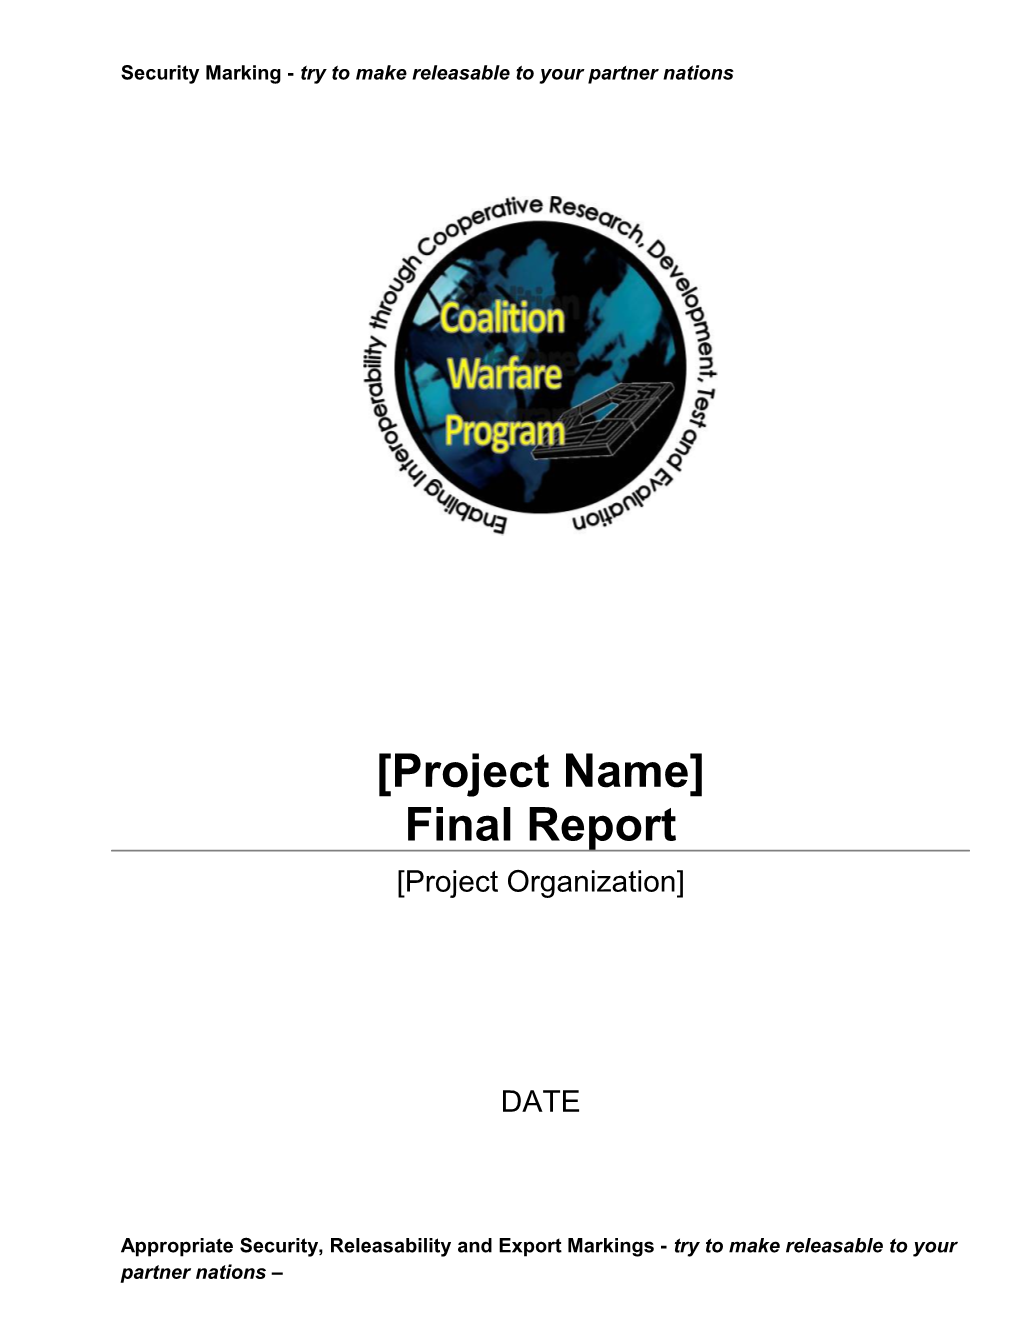 Coalition Warfare Program Final Report Project Title